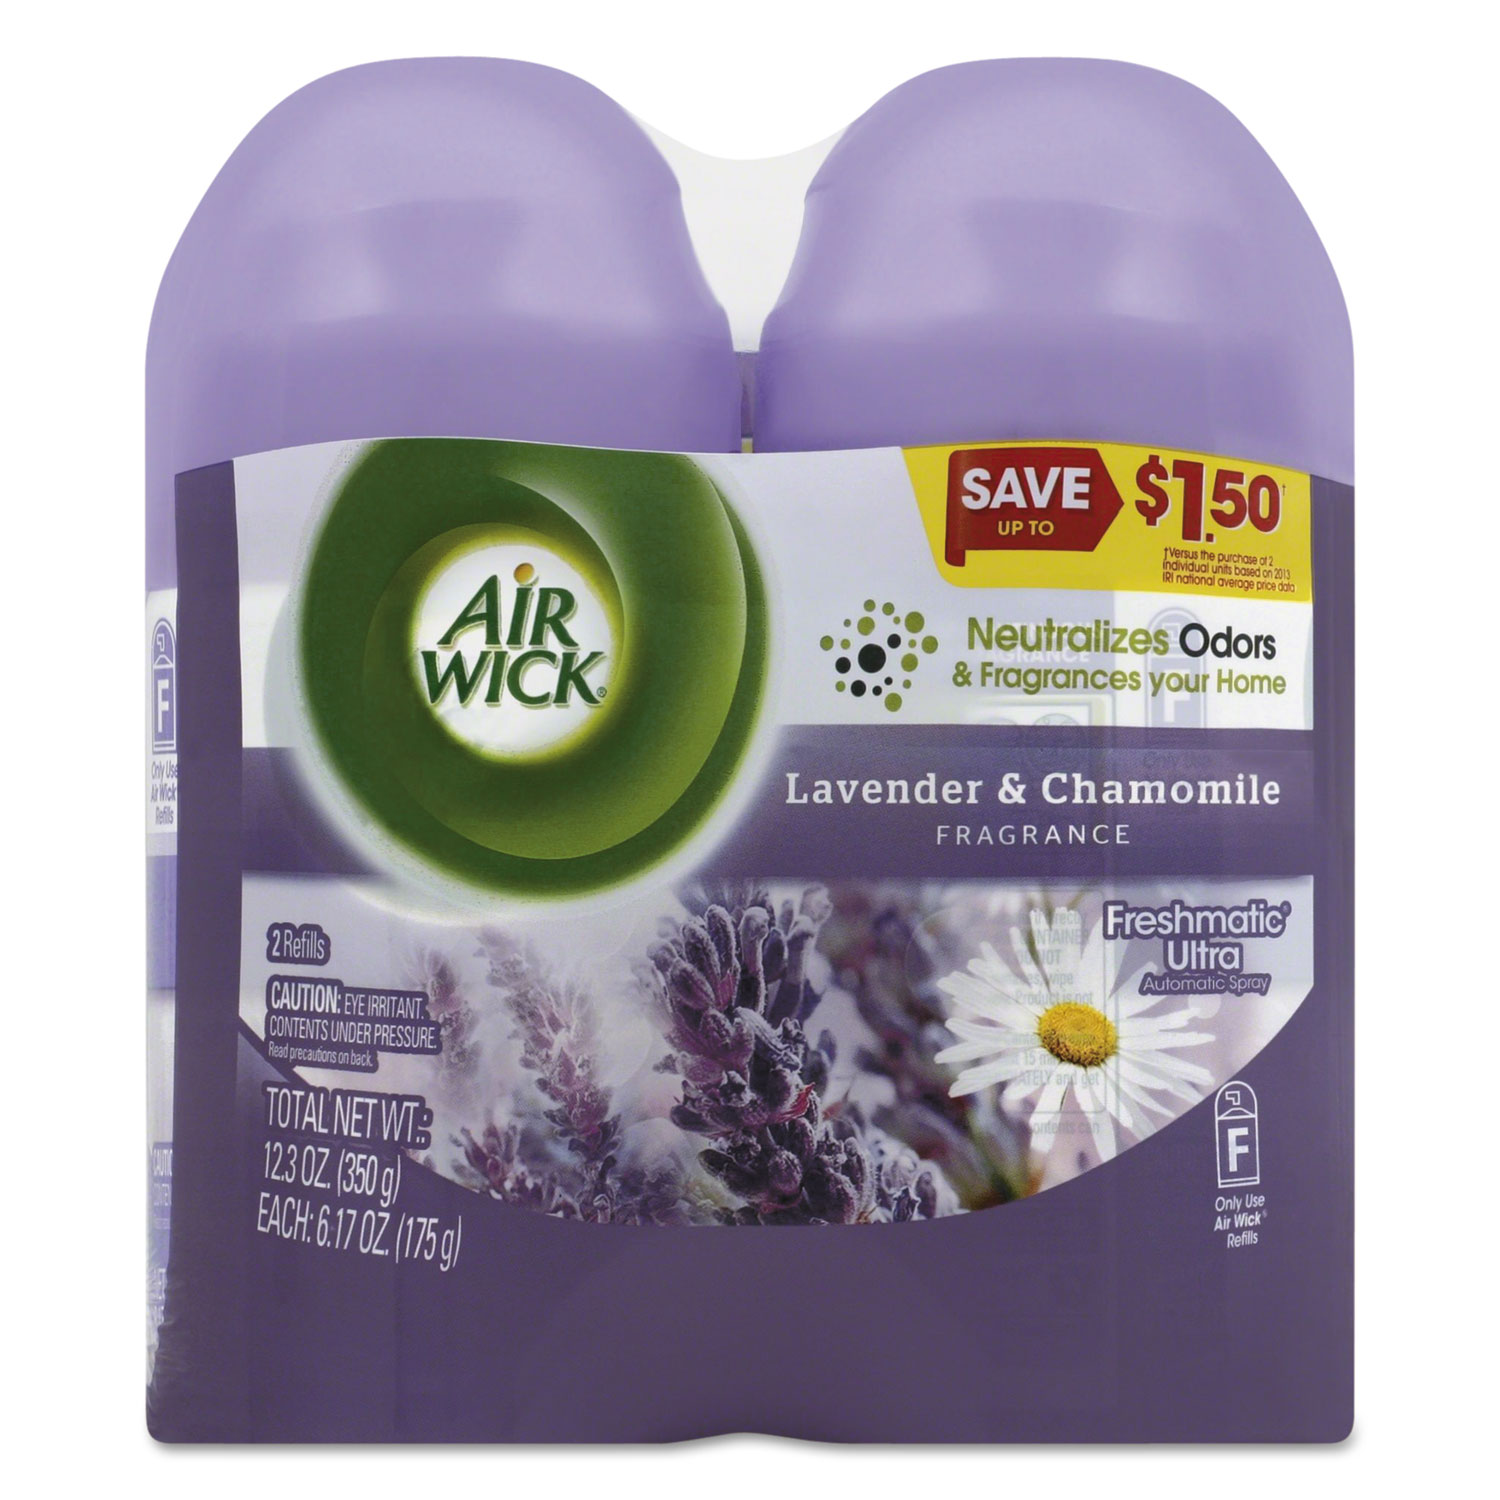 Freshmatic Ultra Spray Refill, Lavender/Chamomile, Aerosol, 6.17oz,2/PK, 3 PK/CT